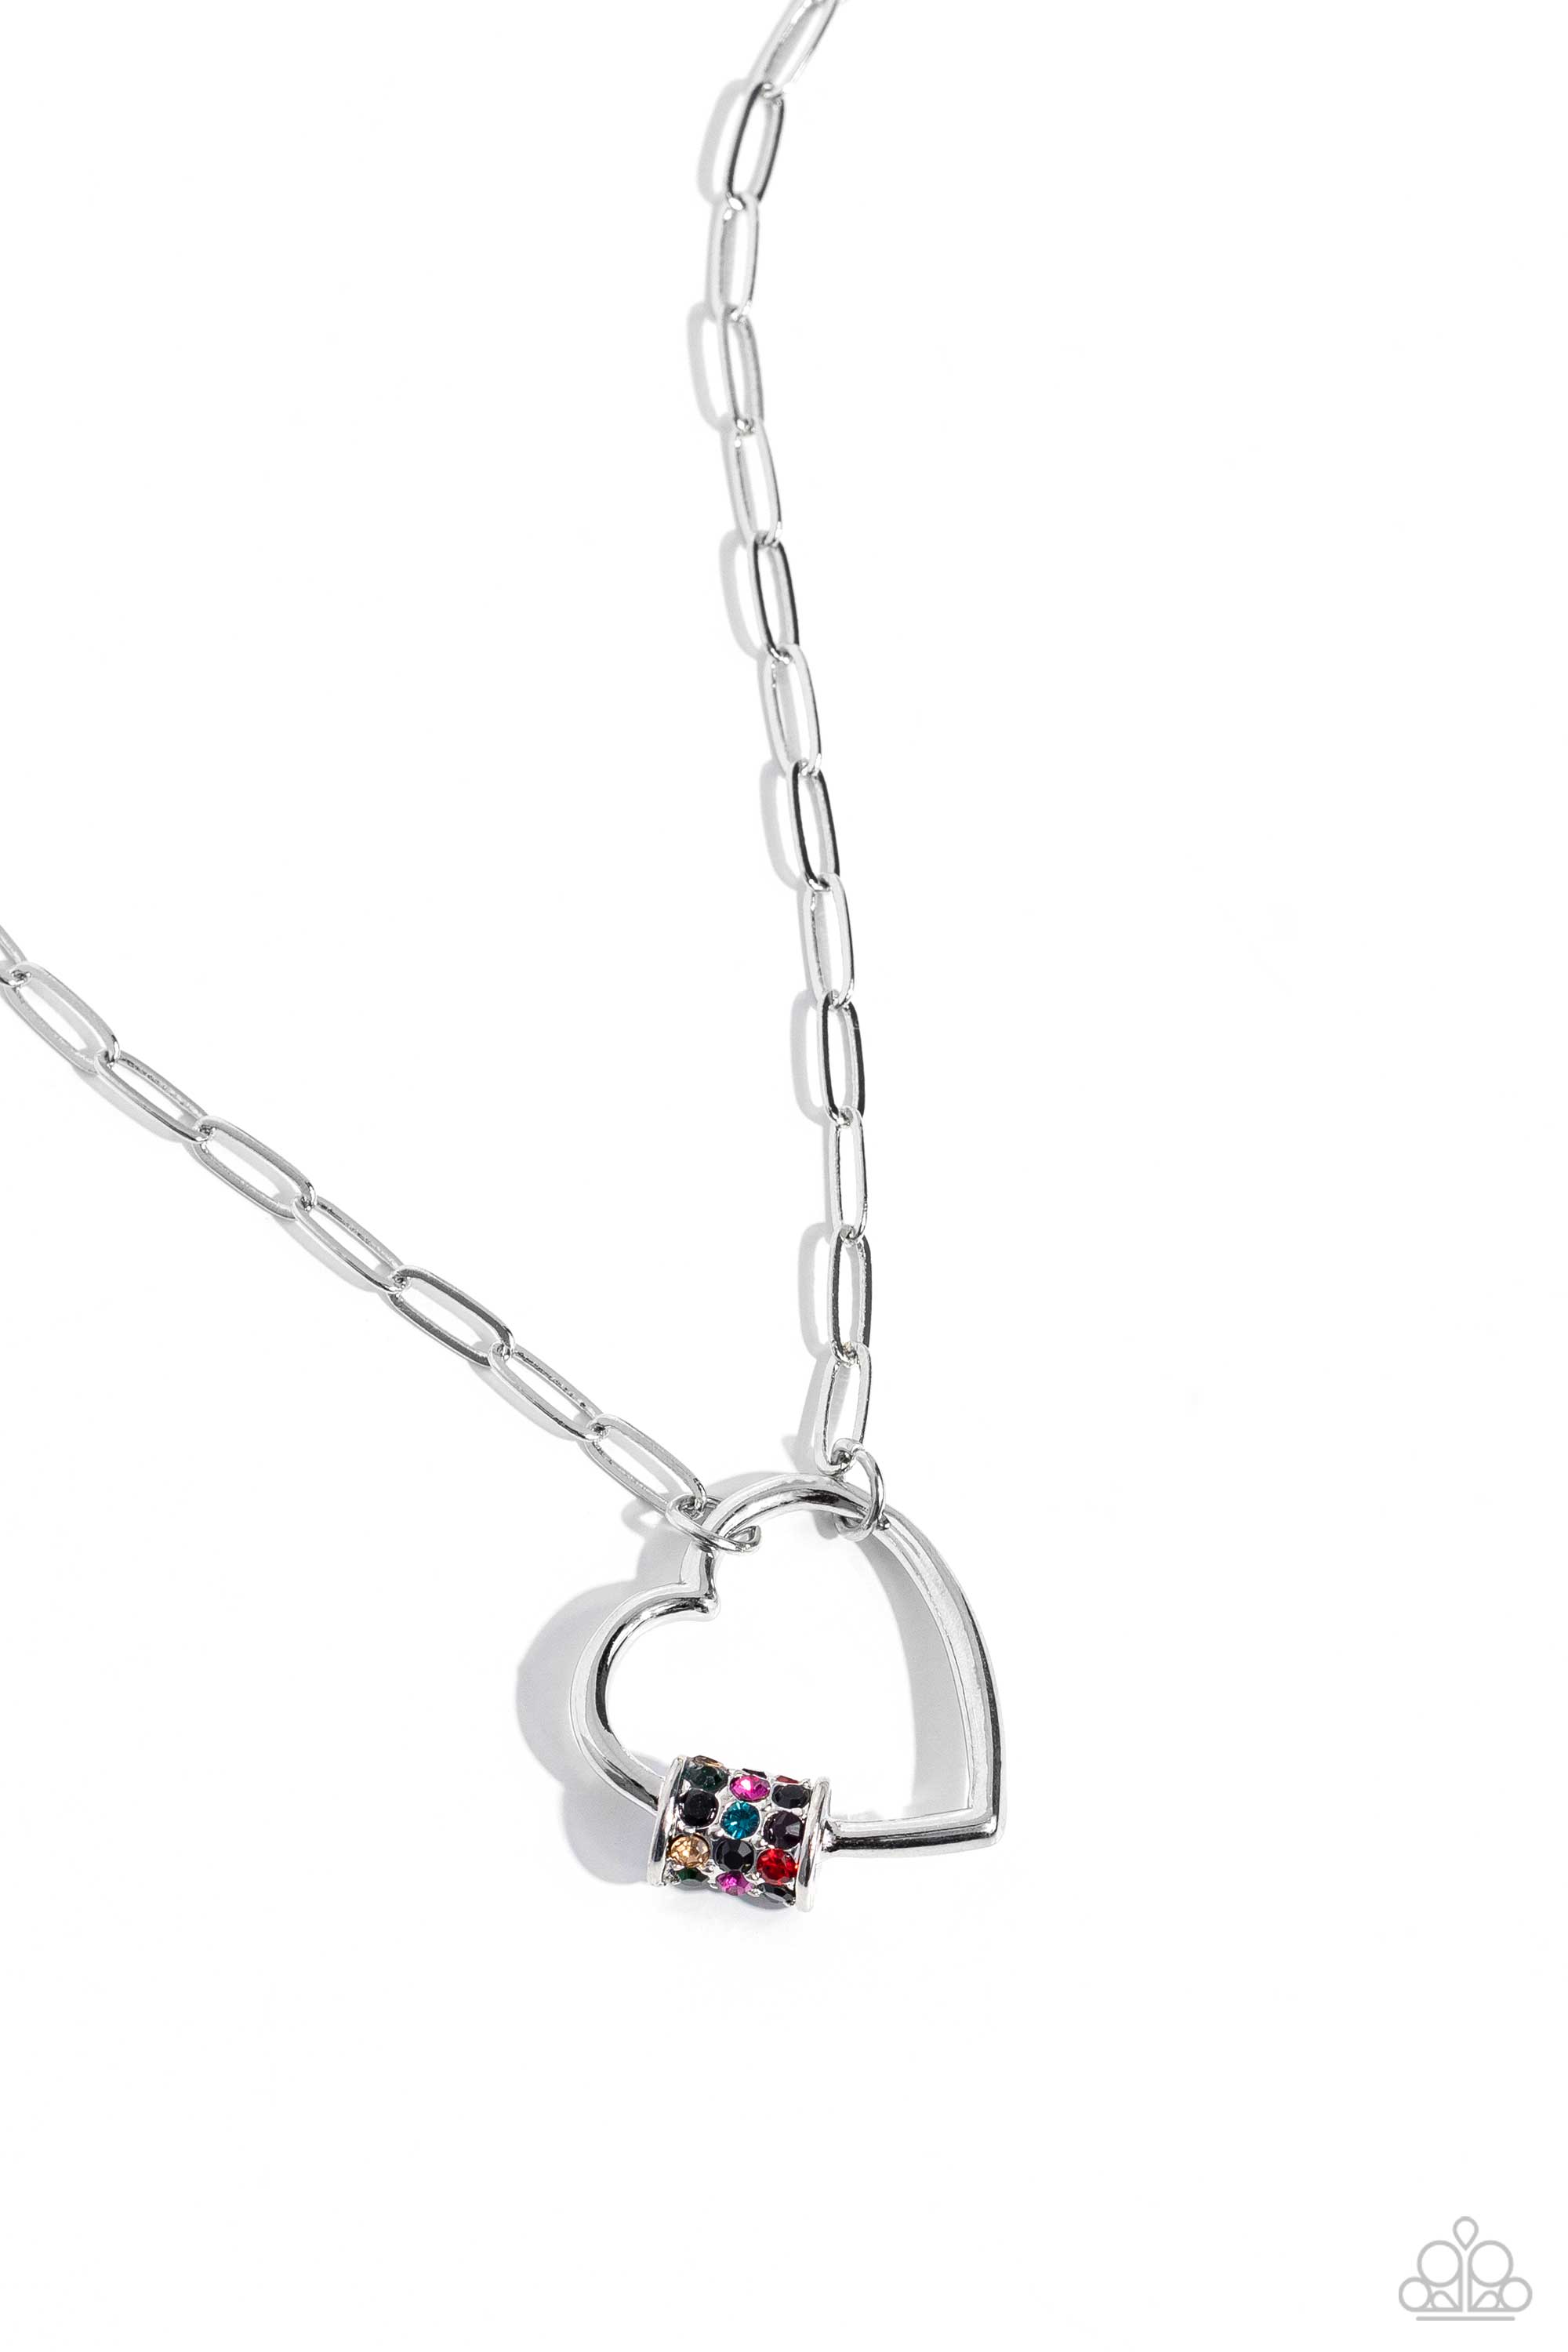 Affectionate Attitude Black & Multi Rhinestone Heart Necklace - Paparazzi Accessories- lightbox - CarasShop.com - $5 Jewelry by Cara Jewels